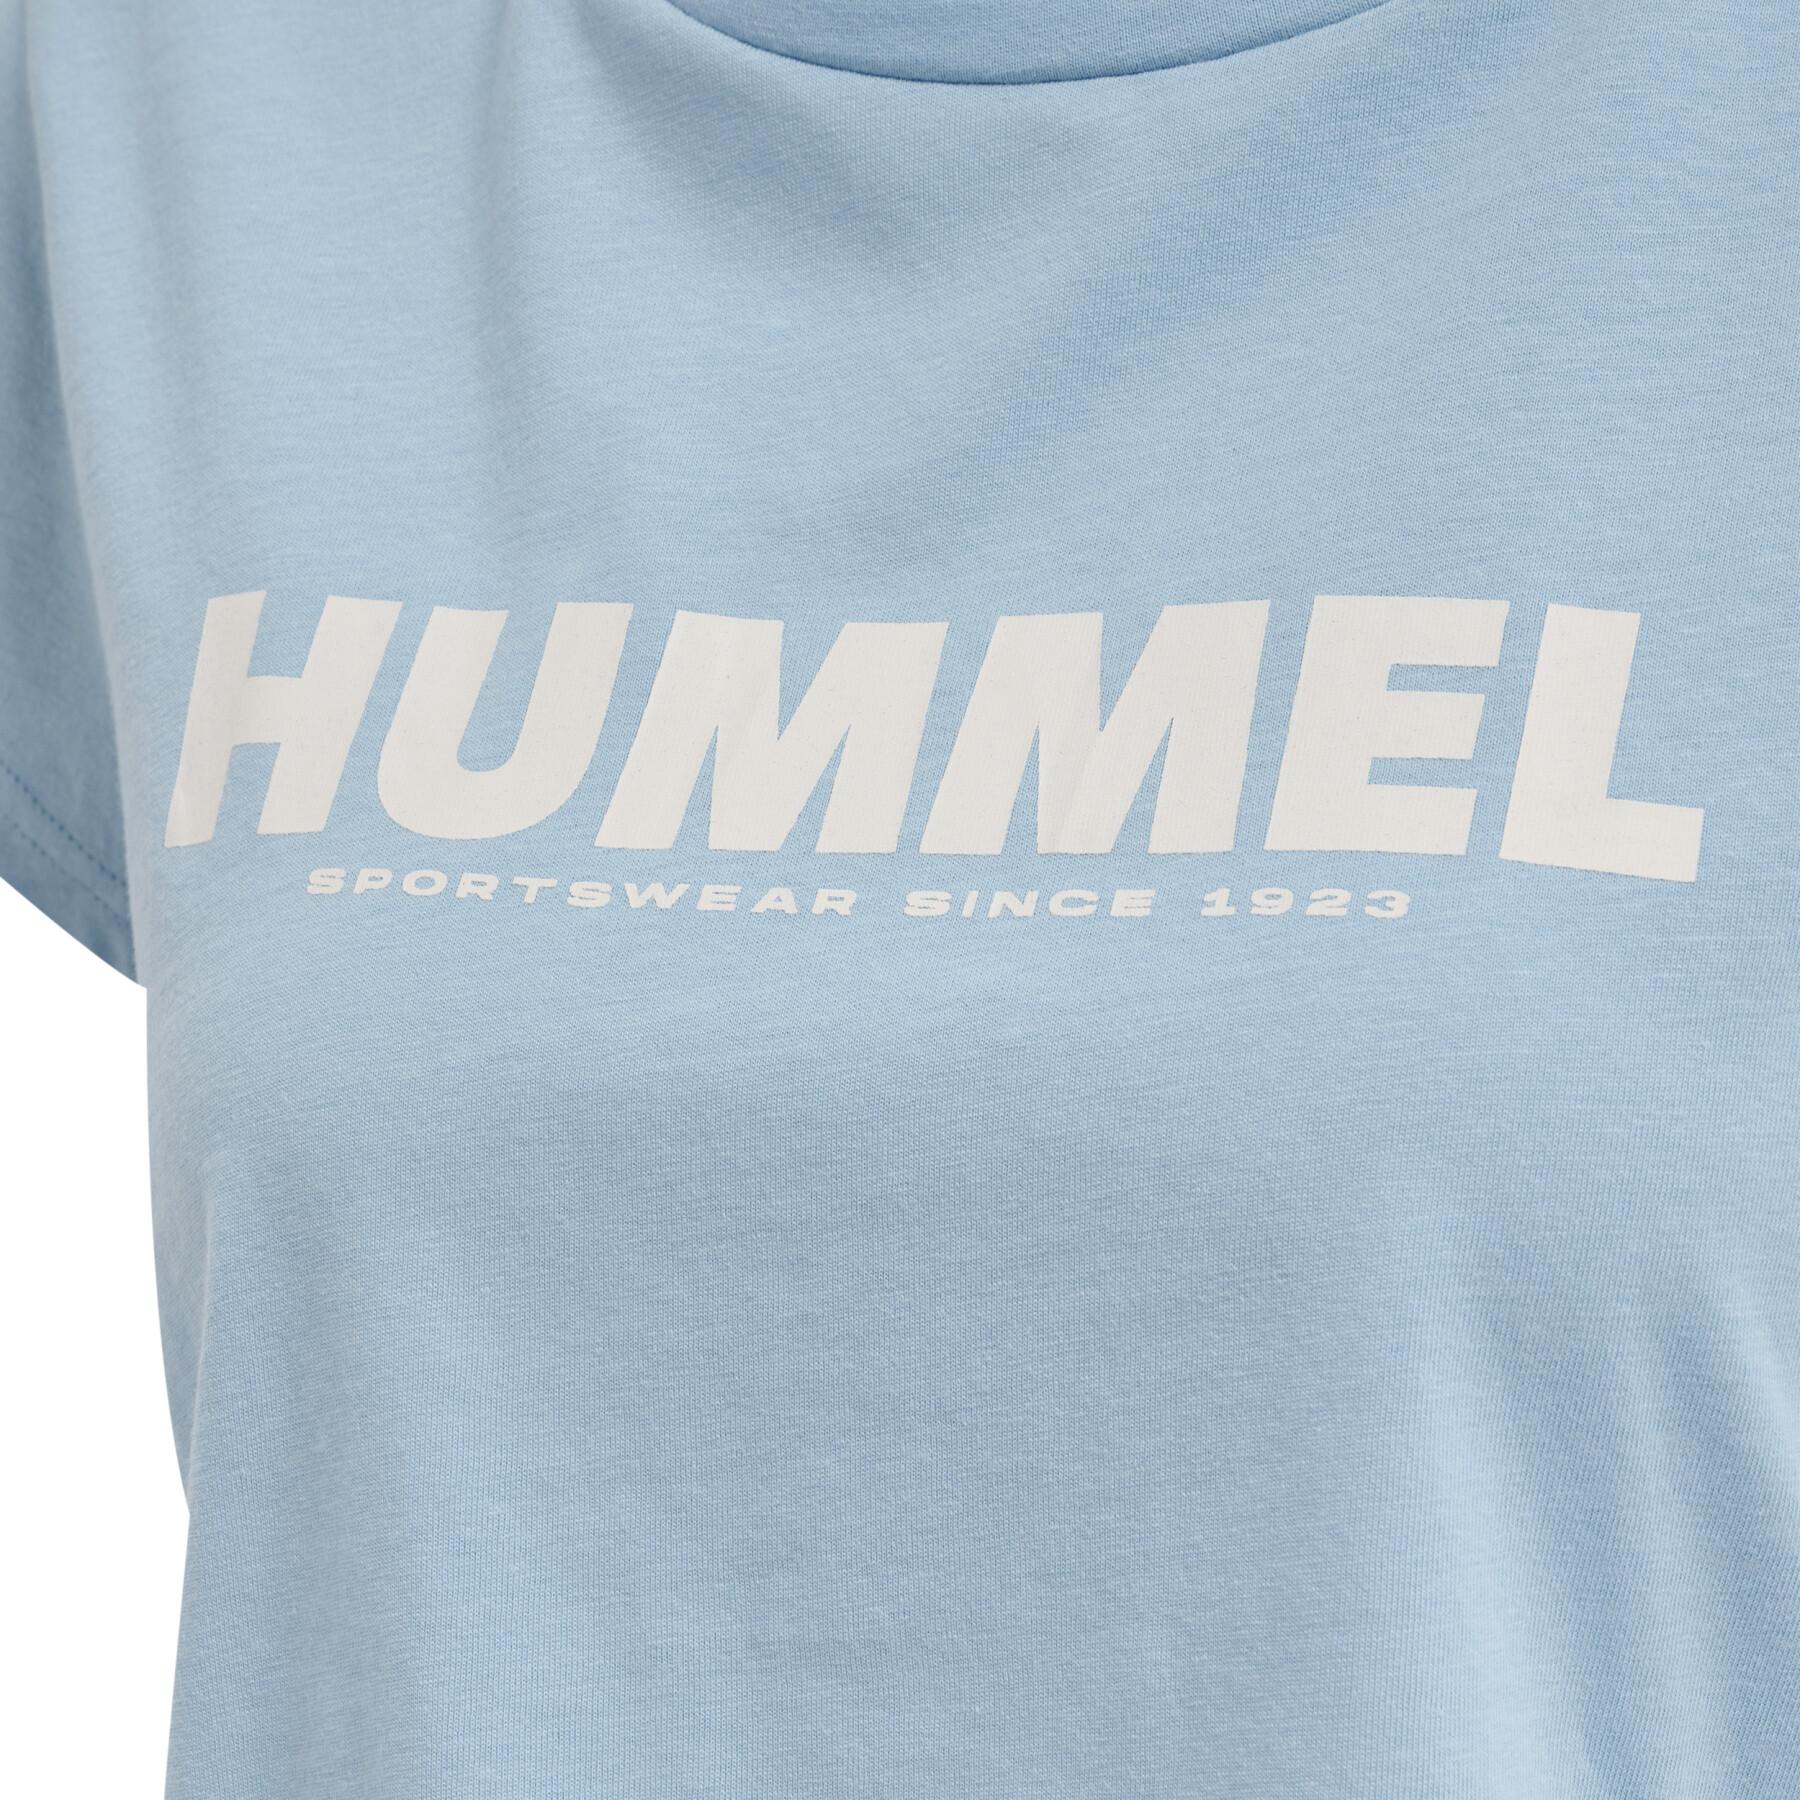 Topo da cultura feminina Hummel Legacy